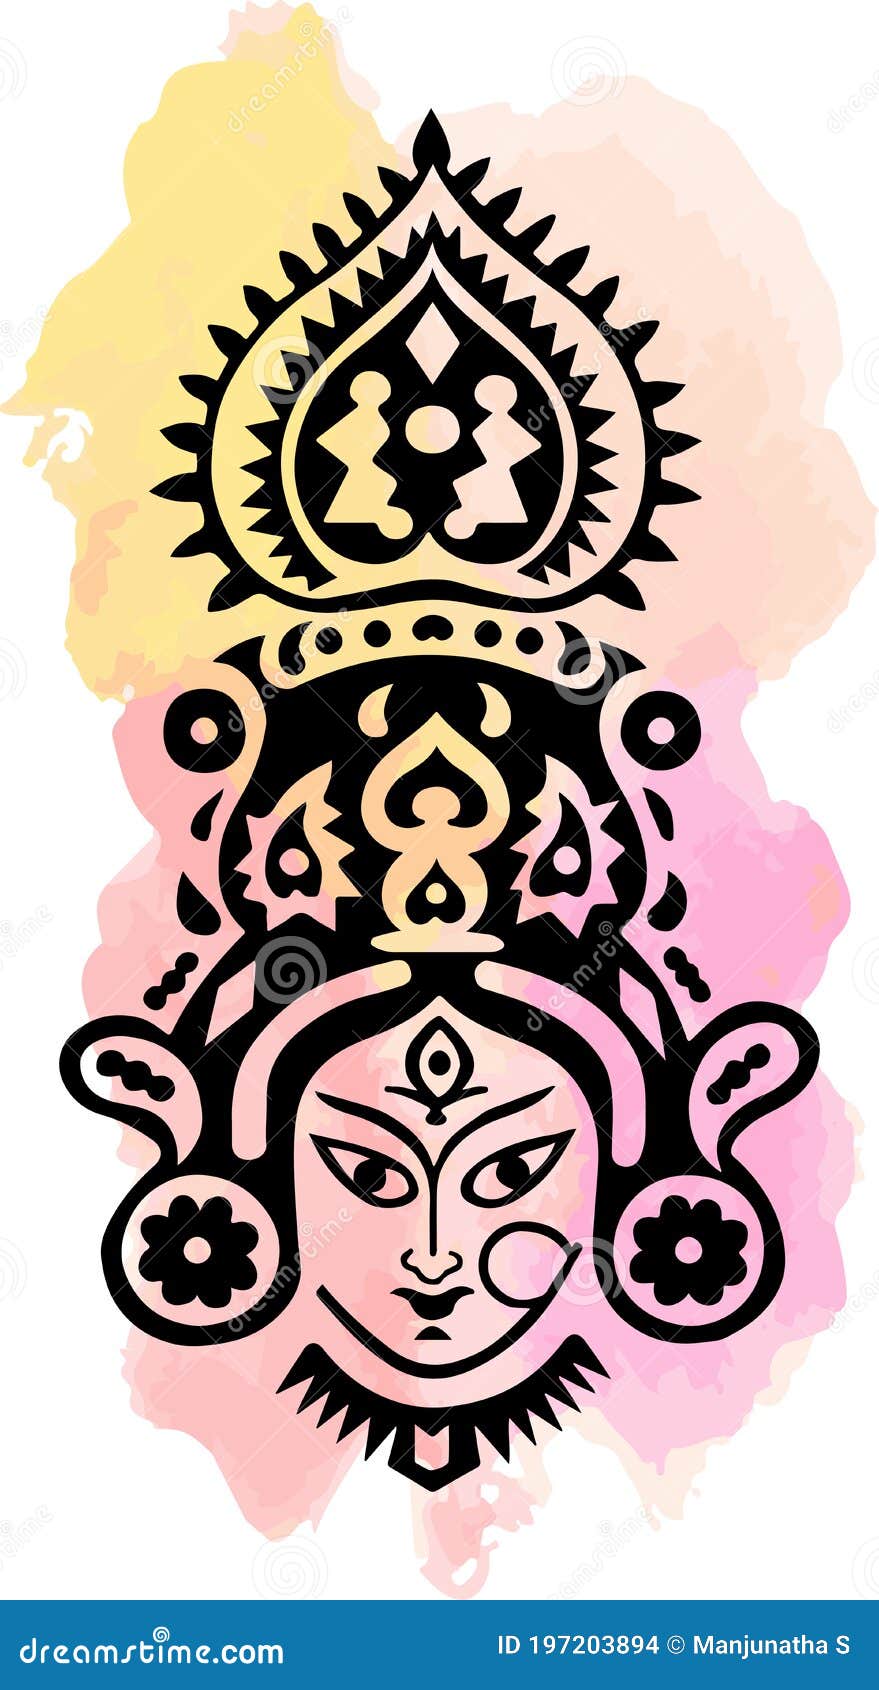 Sketch of Goddess Durga Maa or Durga Closeup Face Design Element ...